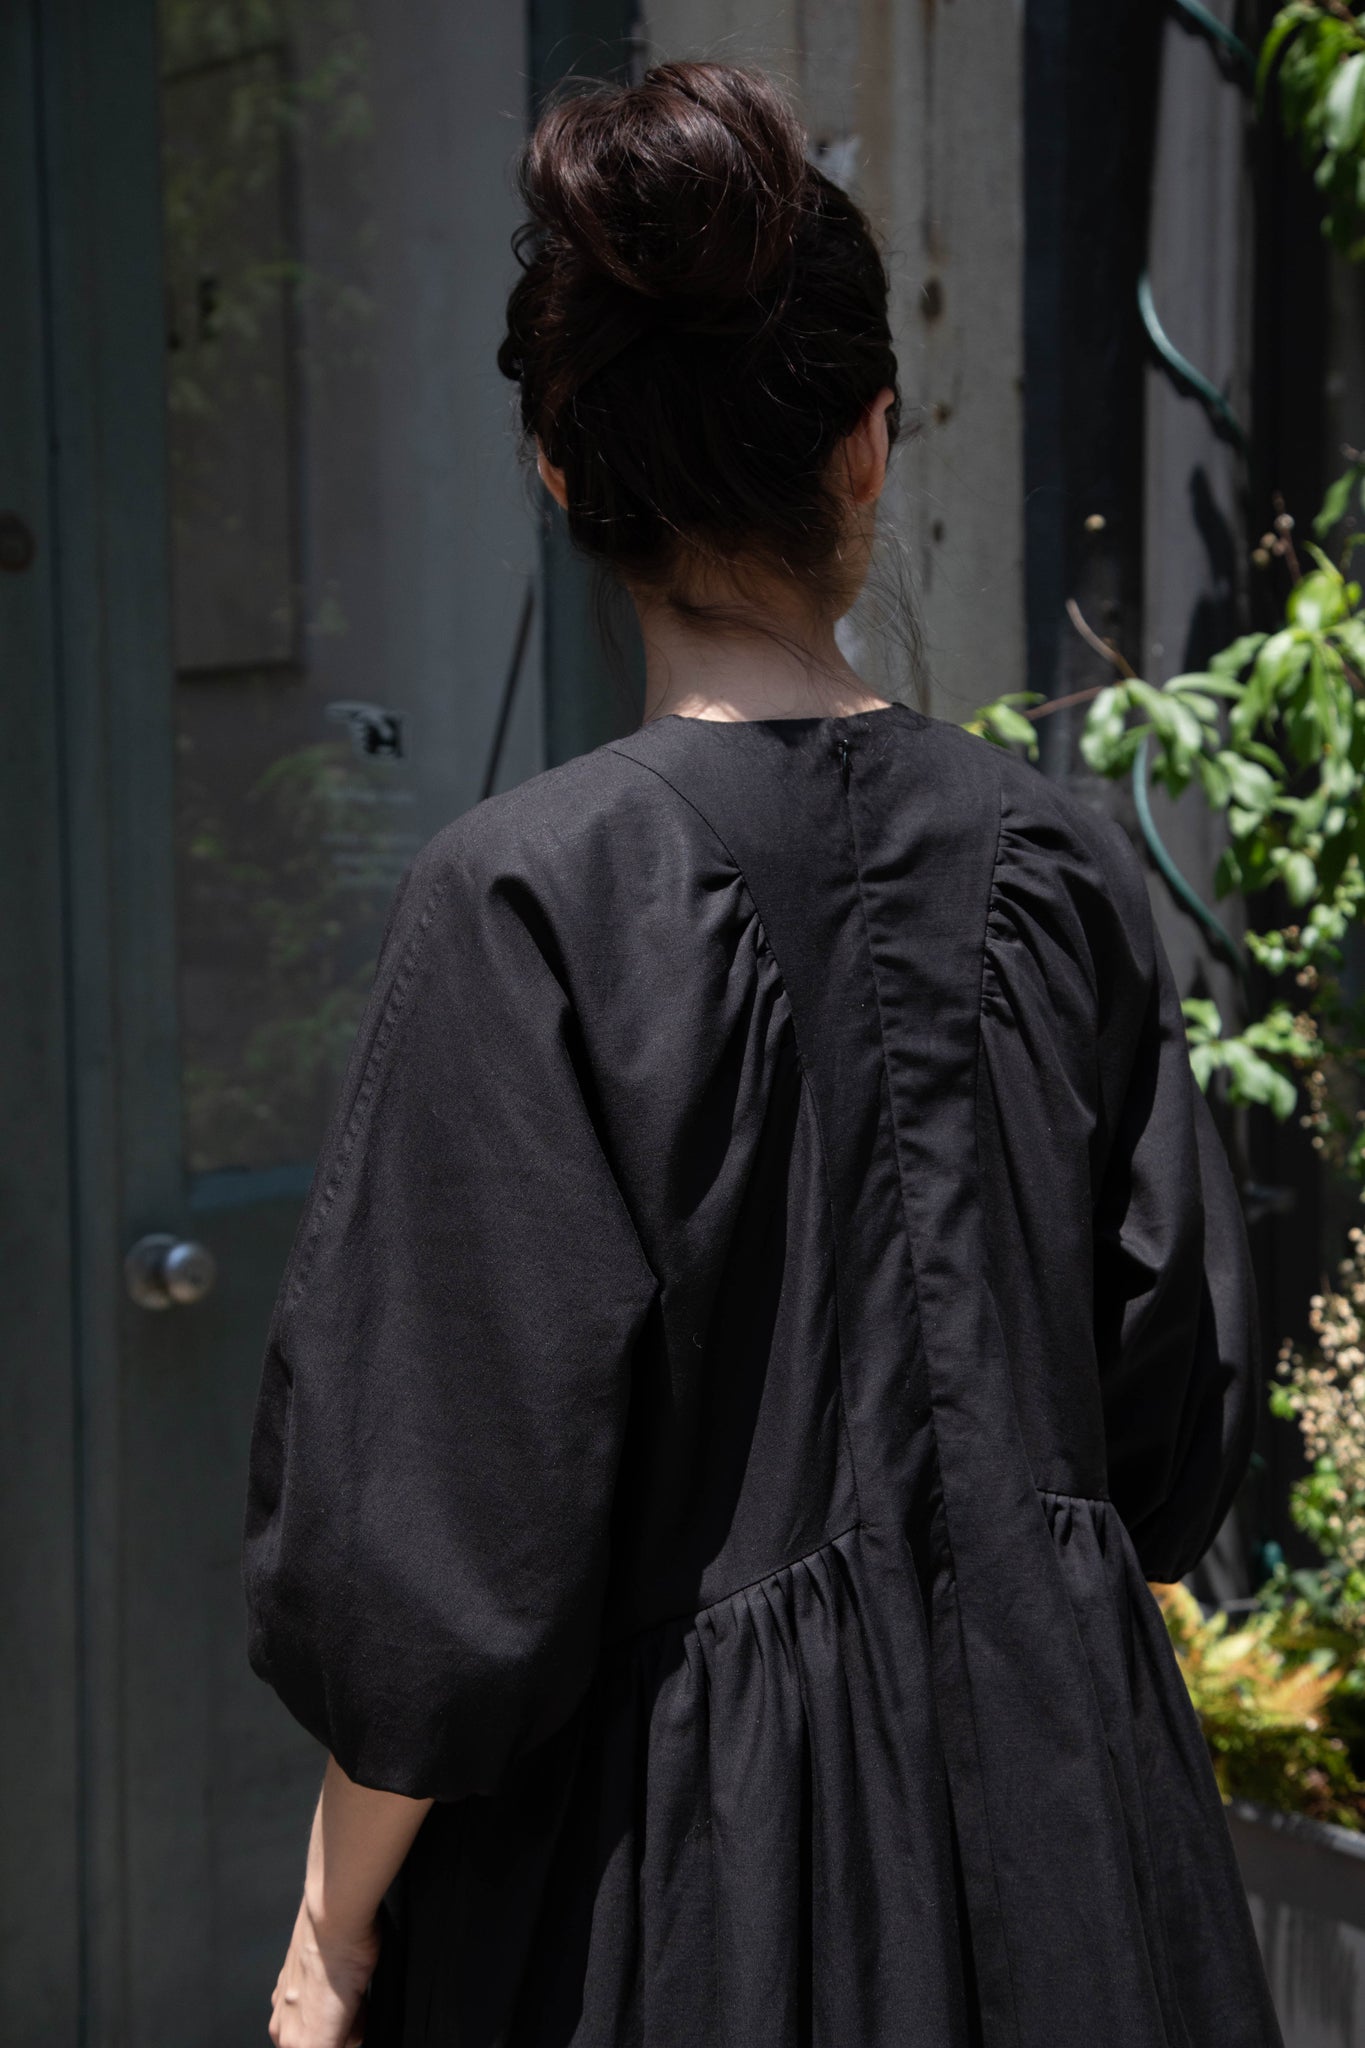 Tenne Handcrafted Modern | Volume Sleeve Tuck Dress in Black